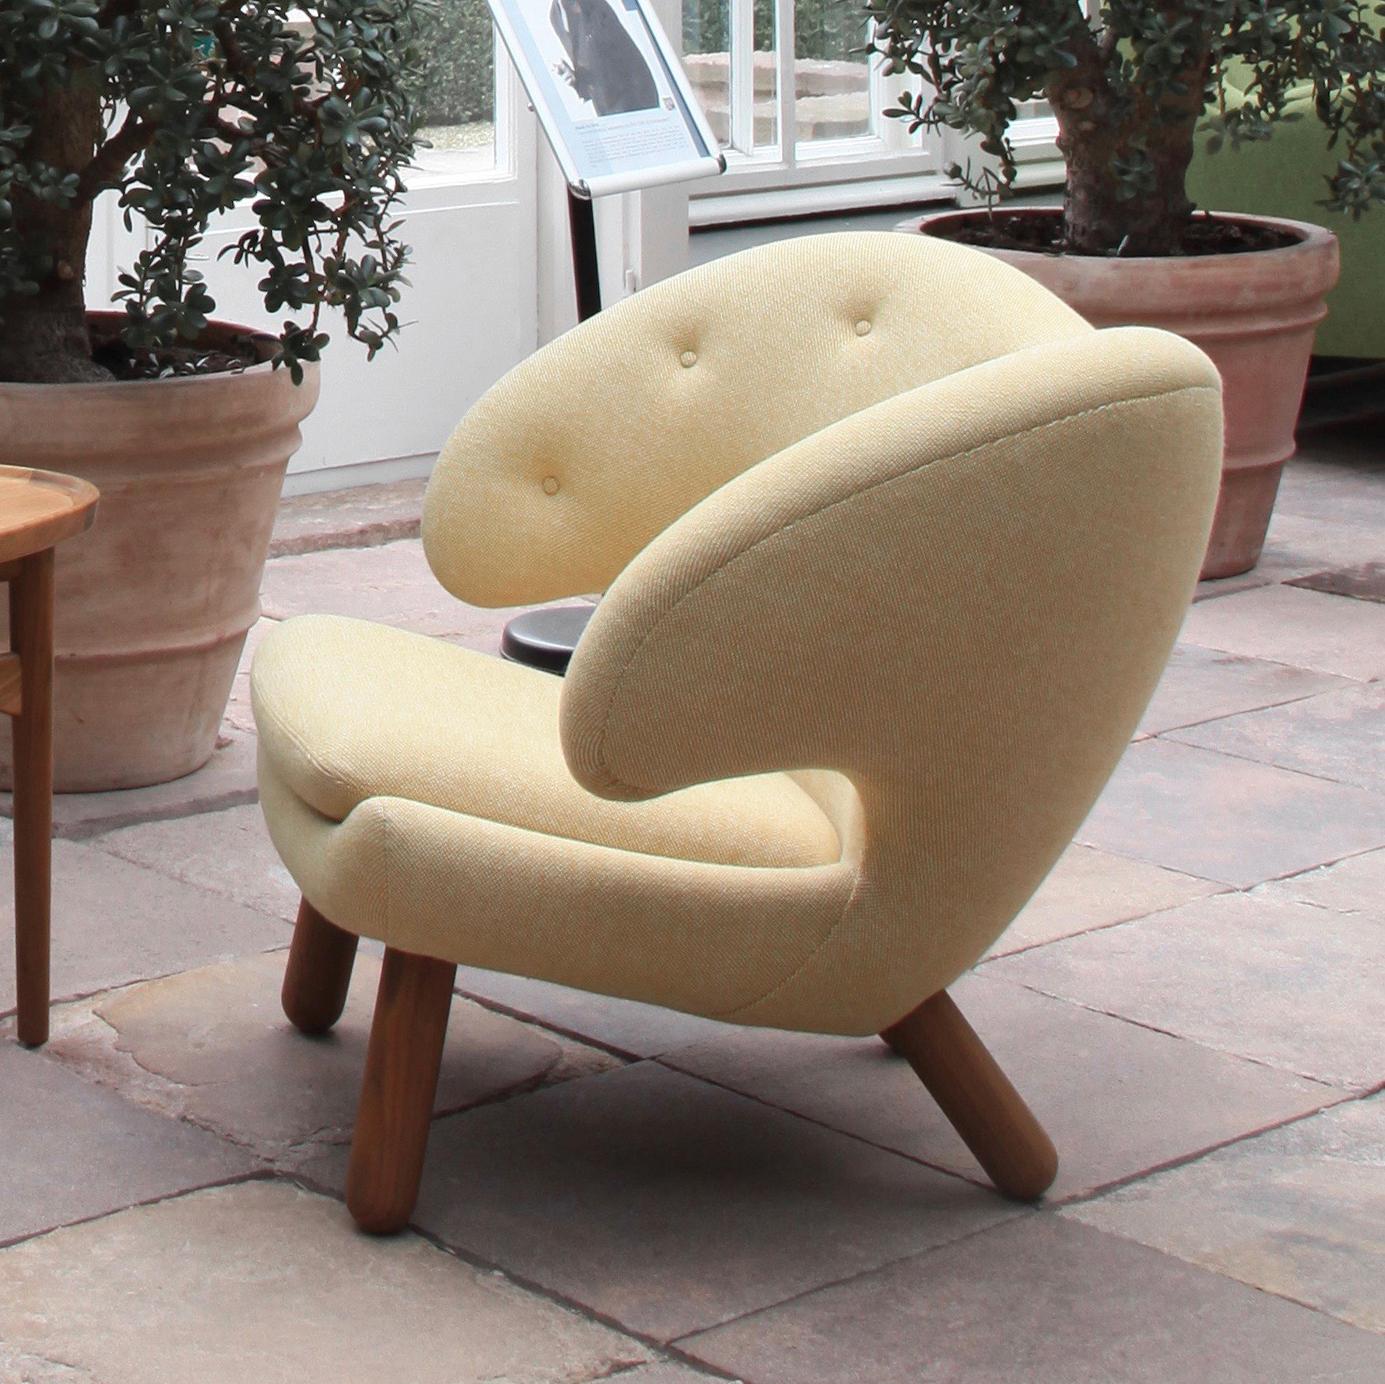 Finn Juhl Pelican Chair, Fabric and Wood 1